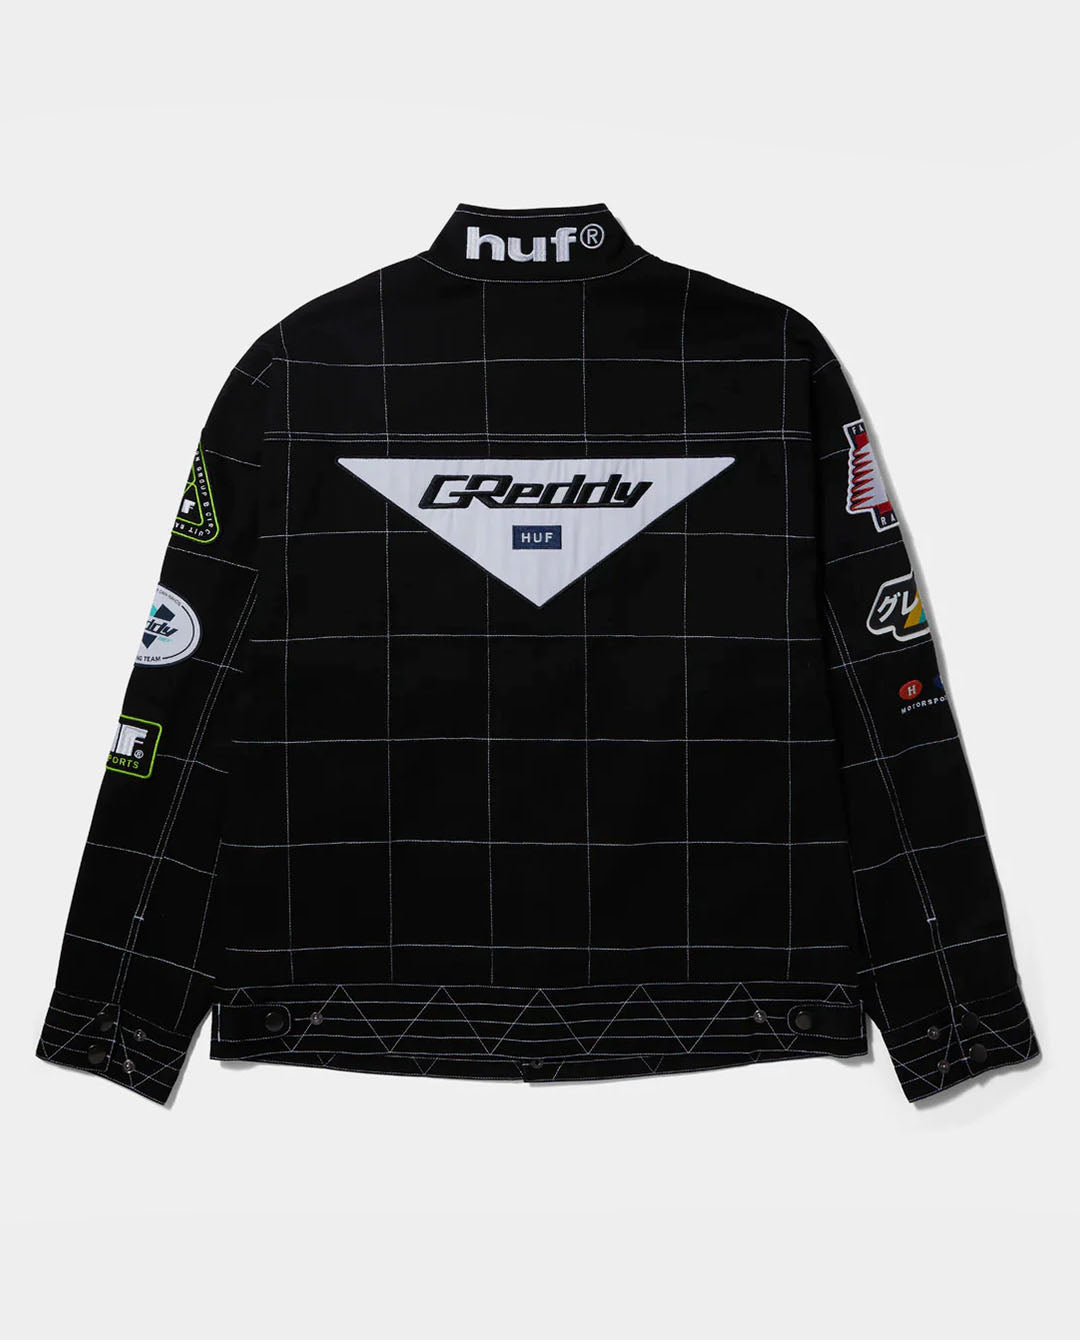 Huf x Greddy - Racing Team Jacket - Black